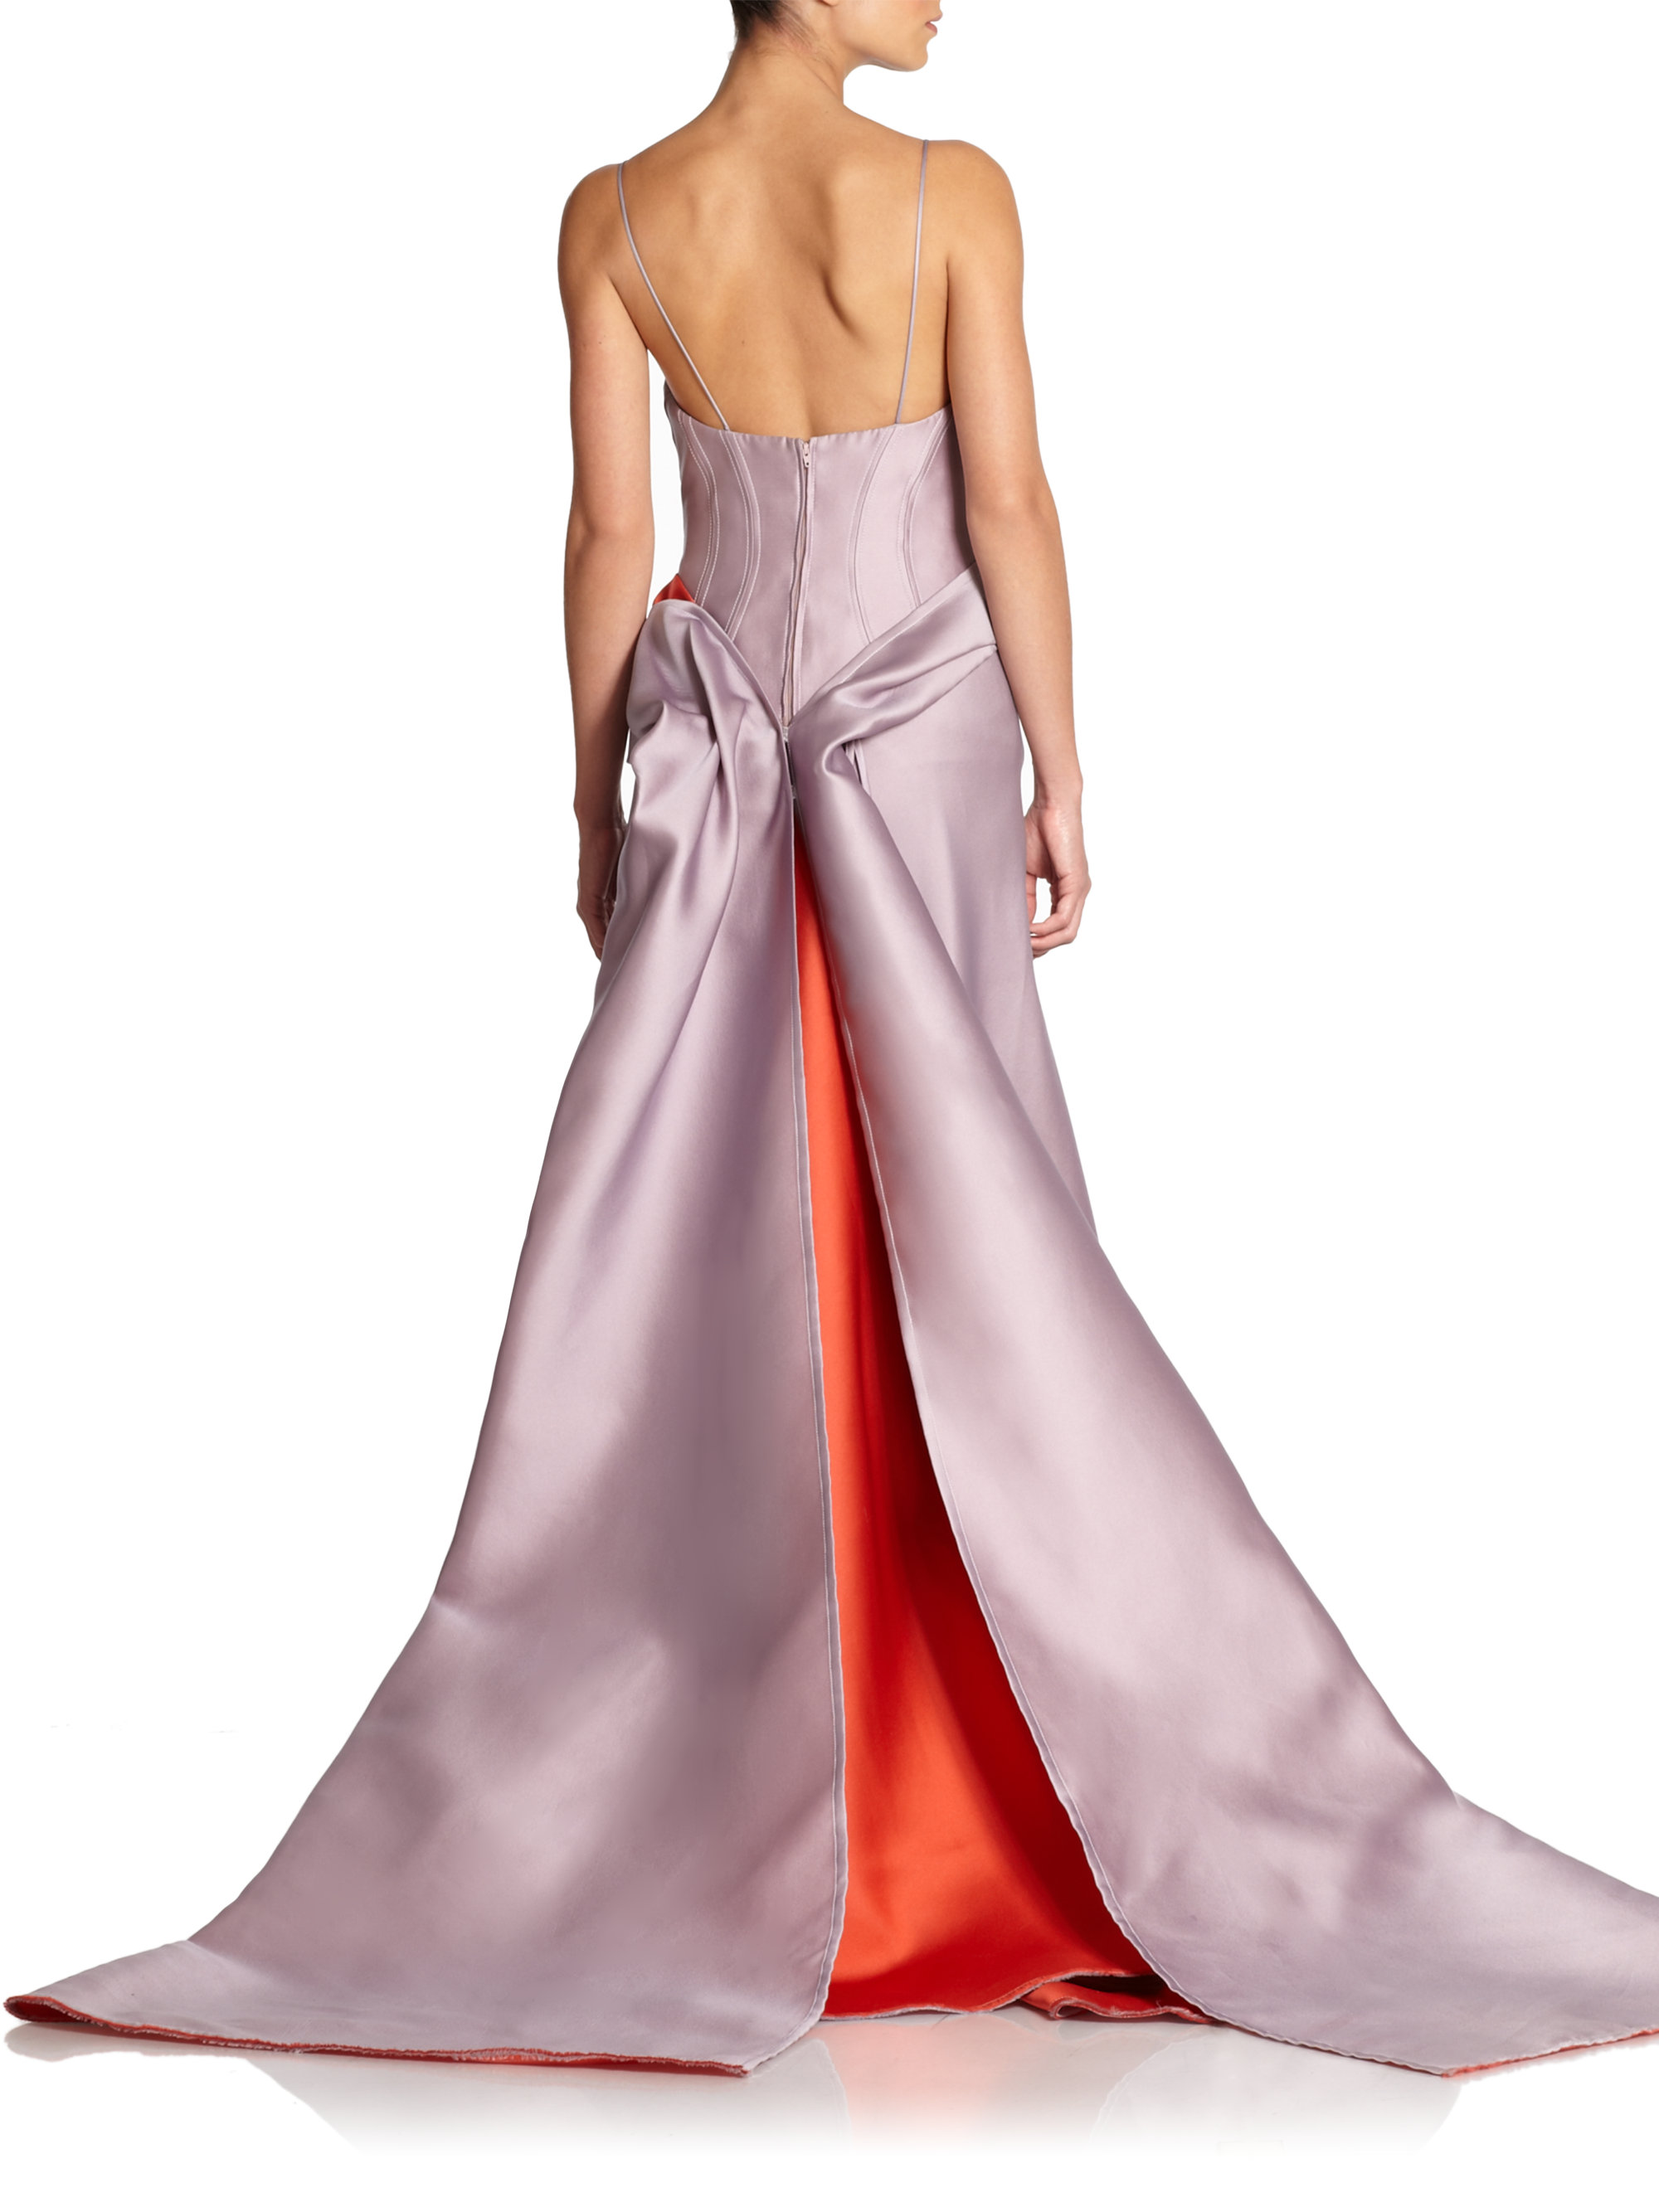 Lyst - Carolina Herrera Folded Evening Gown in Purple